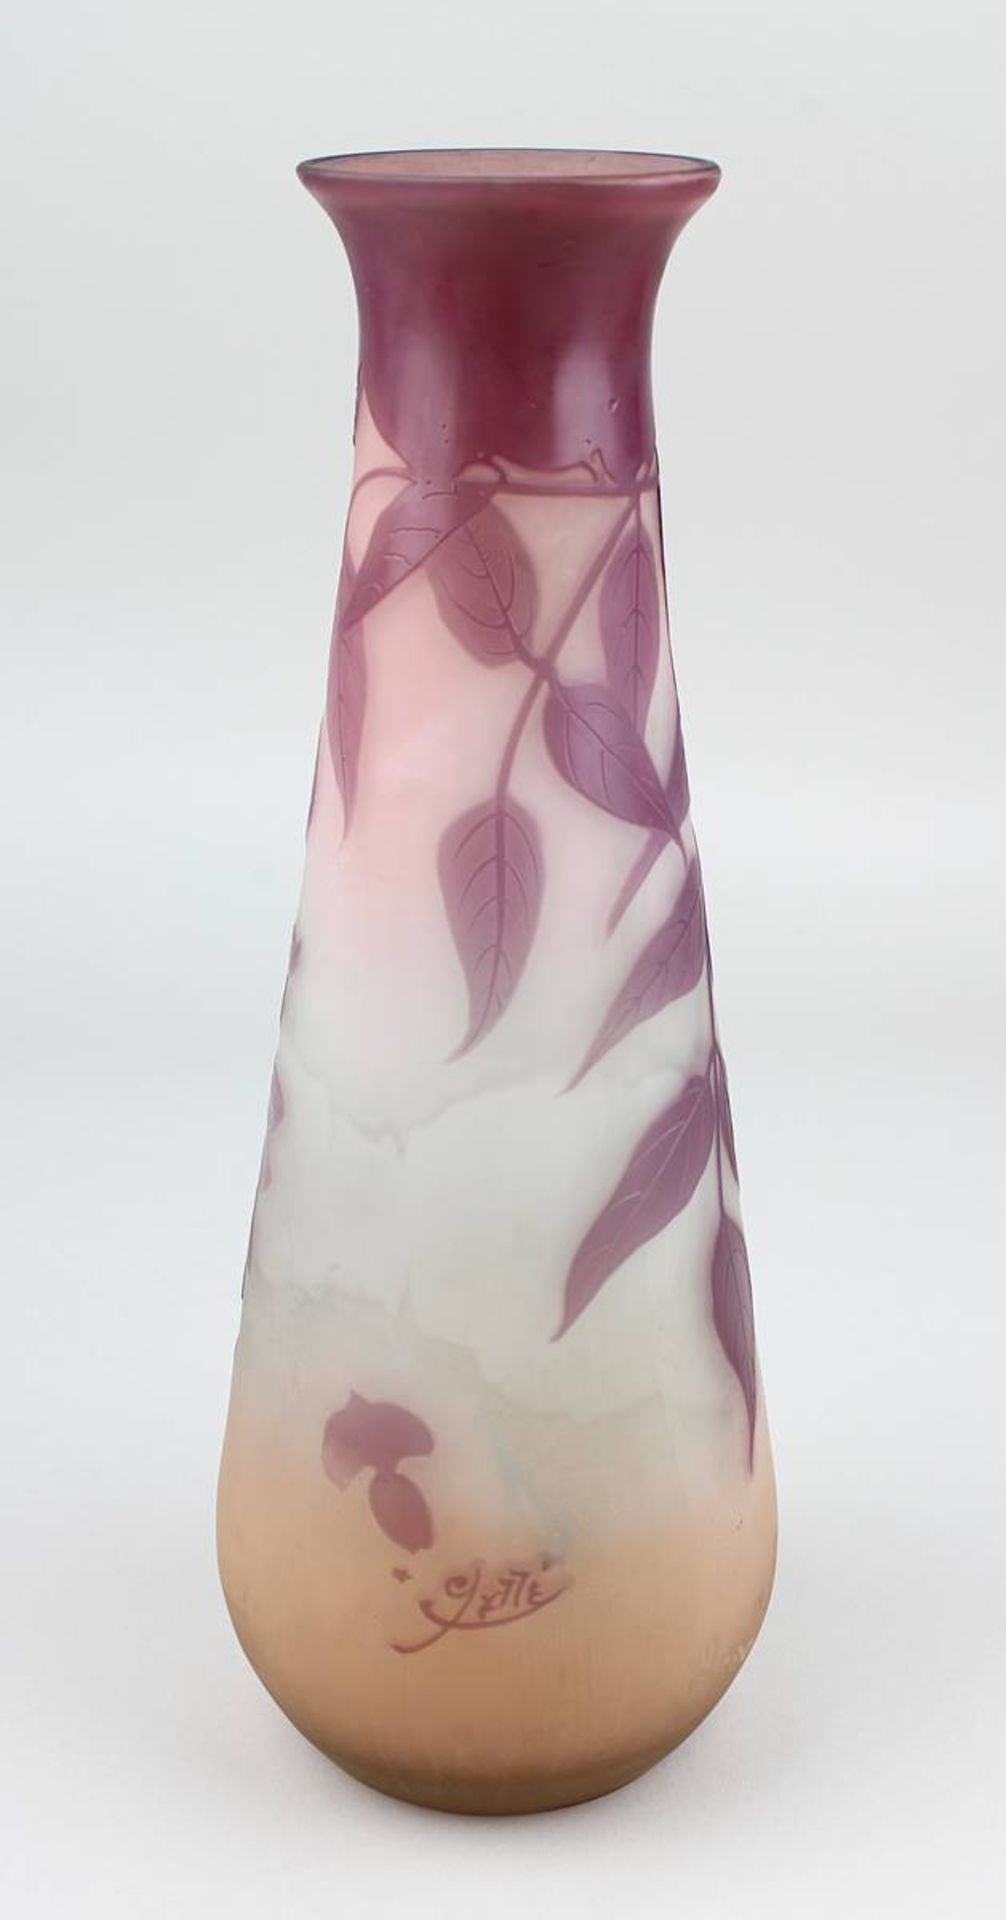 Gallé Jugendstil-Vase mit Glyziniendekor, Nancy 1904 - 1906, keulenförmiger Klarglaskorpus, innen - Image 2 of 4